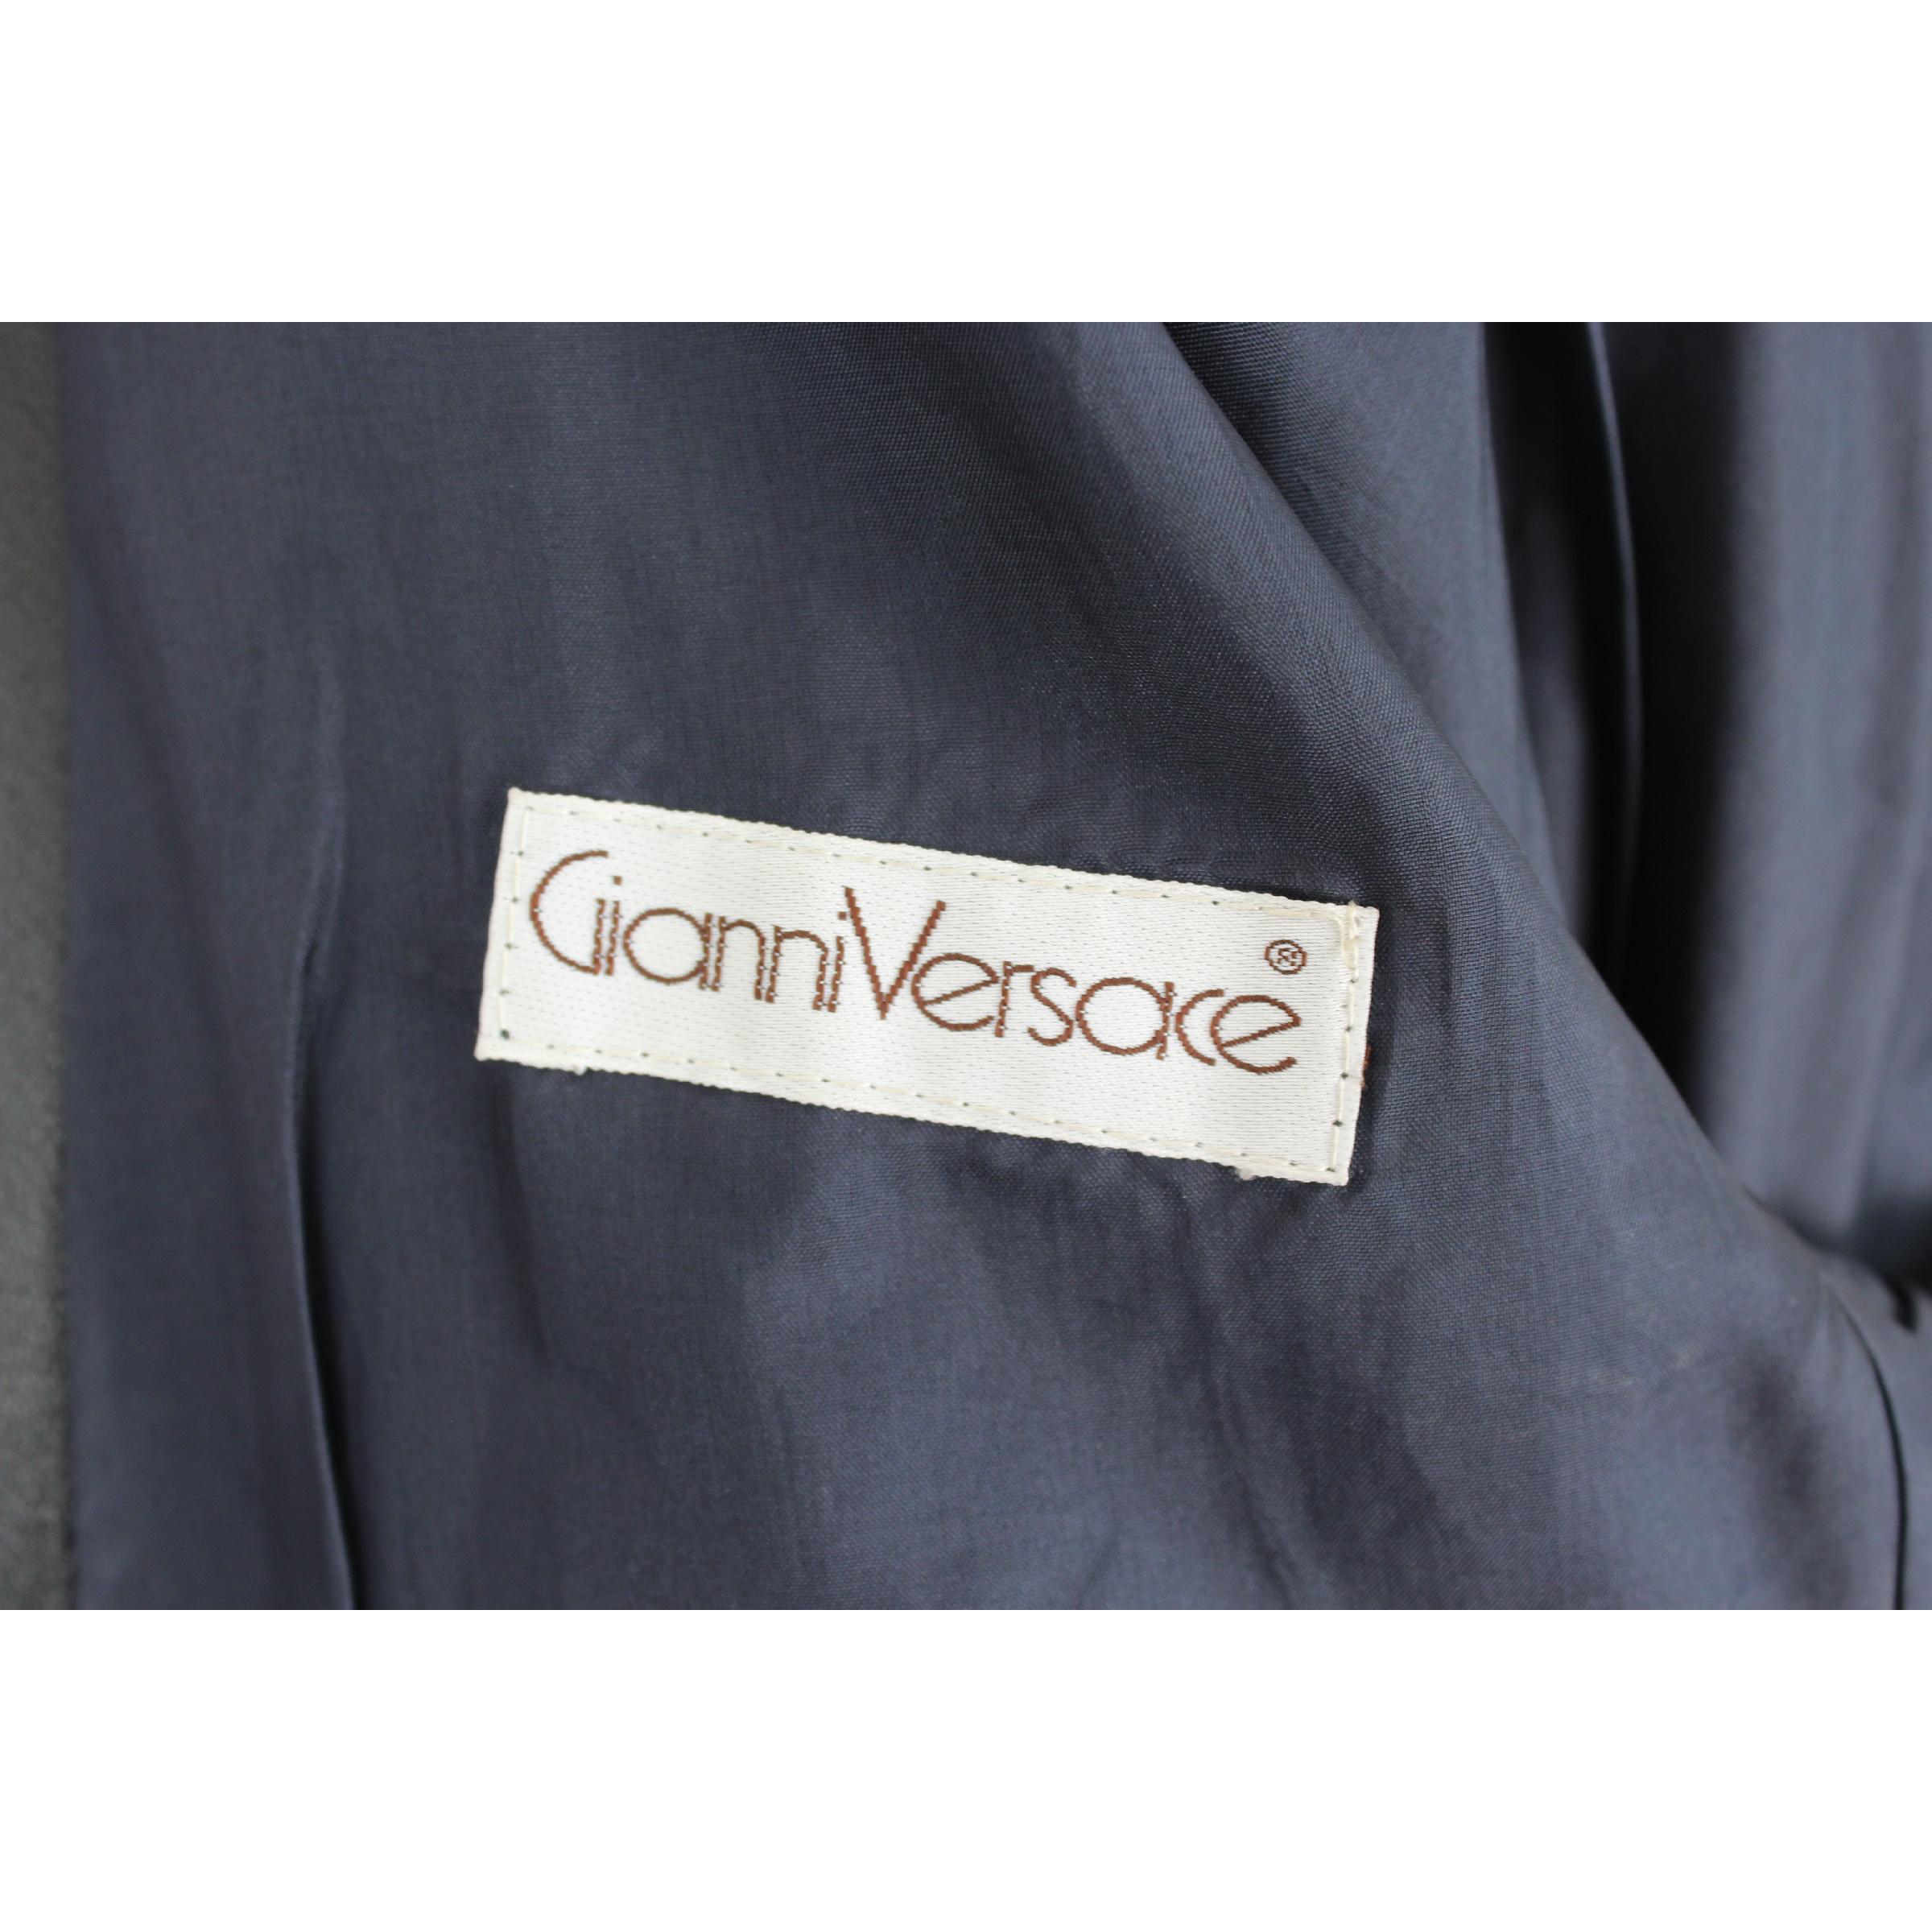 Gianni Versace Leather Jacket Embroidered Blue Short Bolero 1980s 5